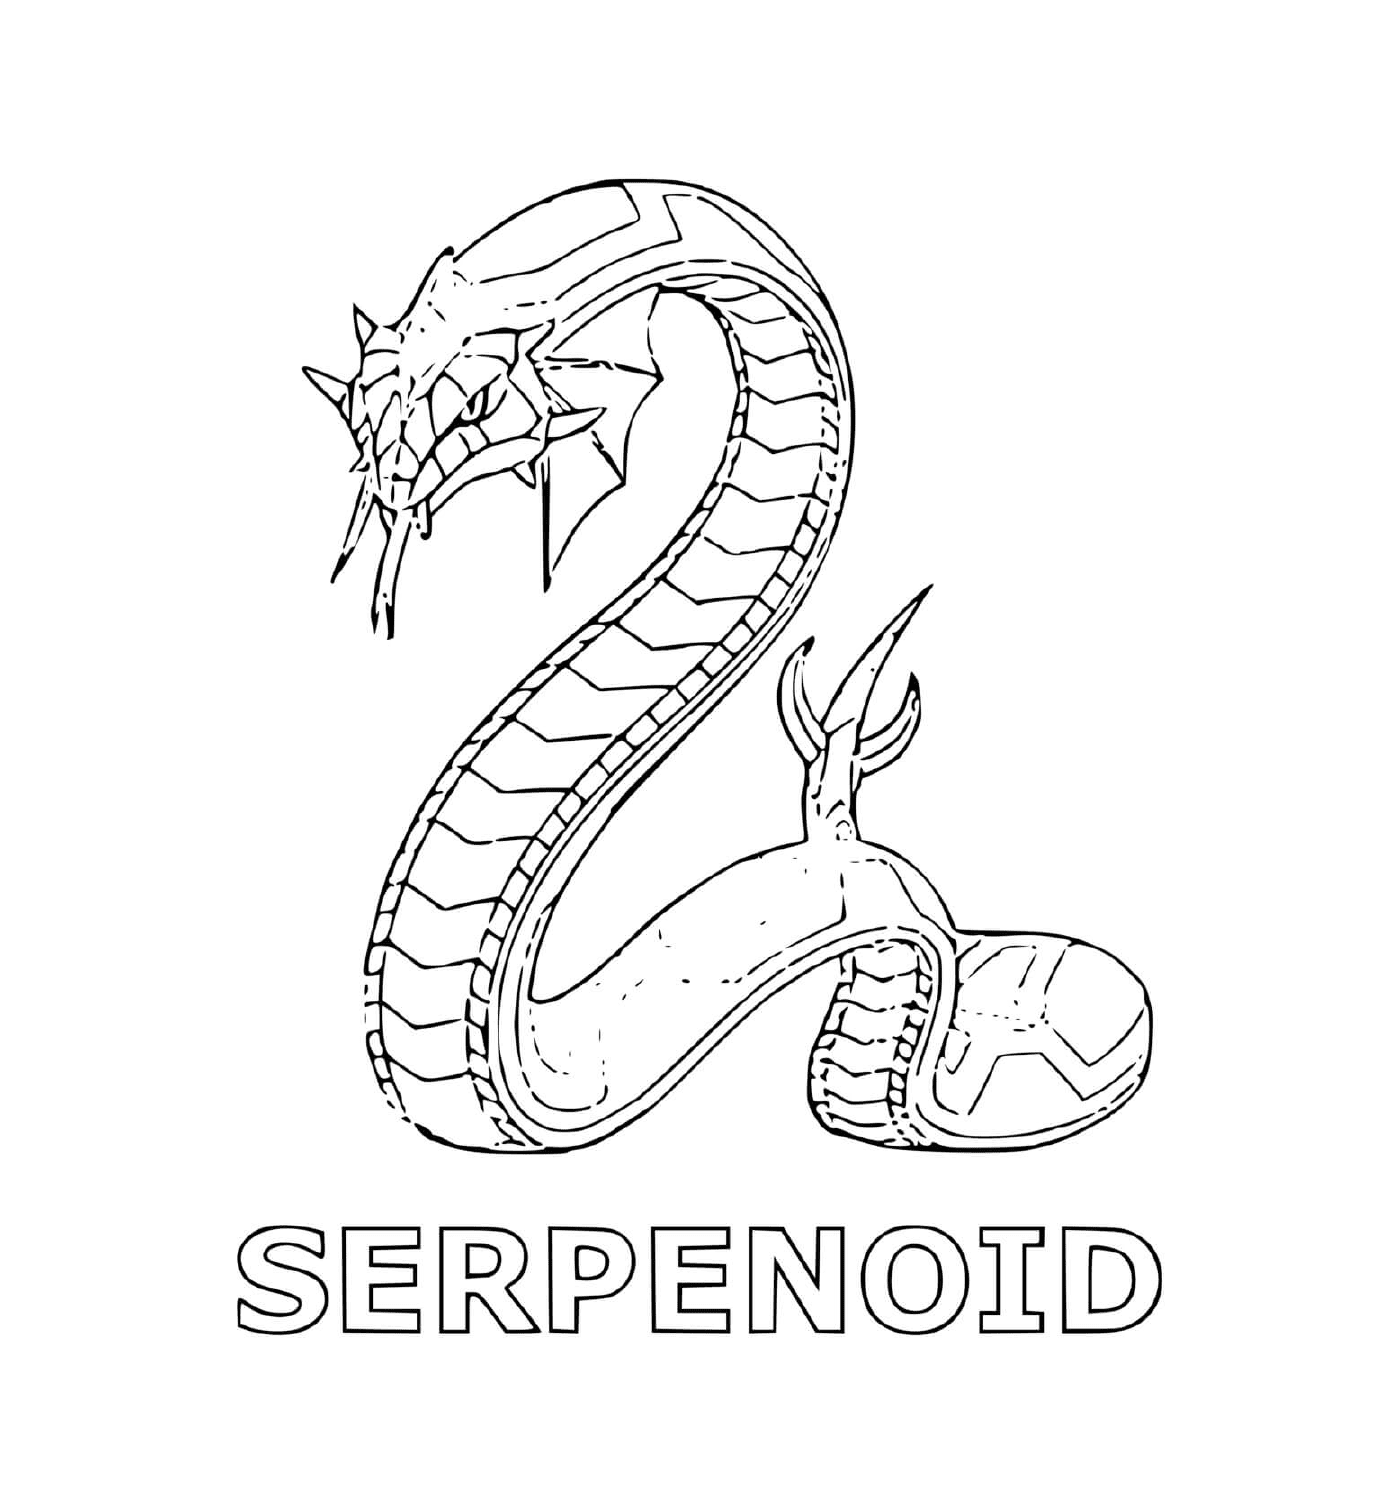  Змея со словом serpenoid под 